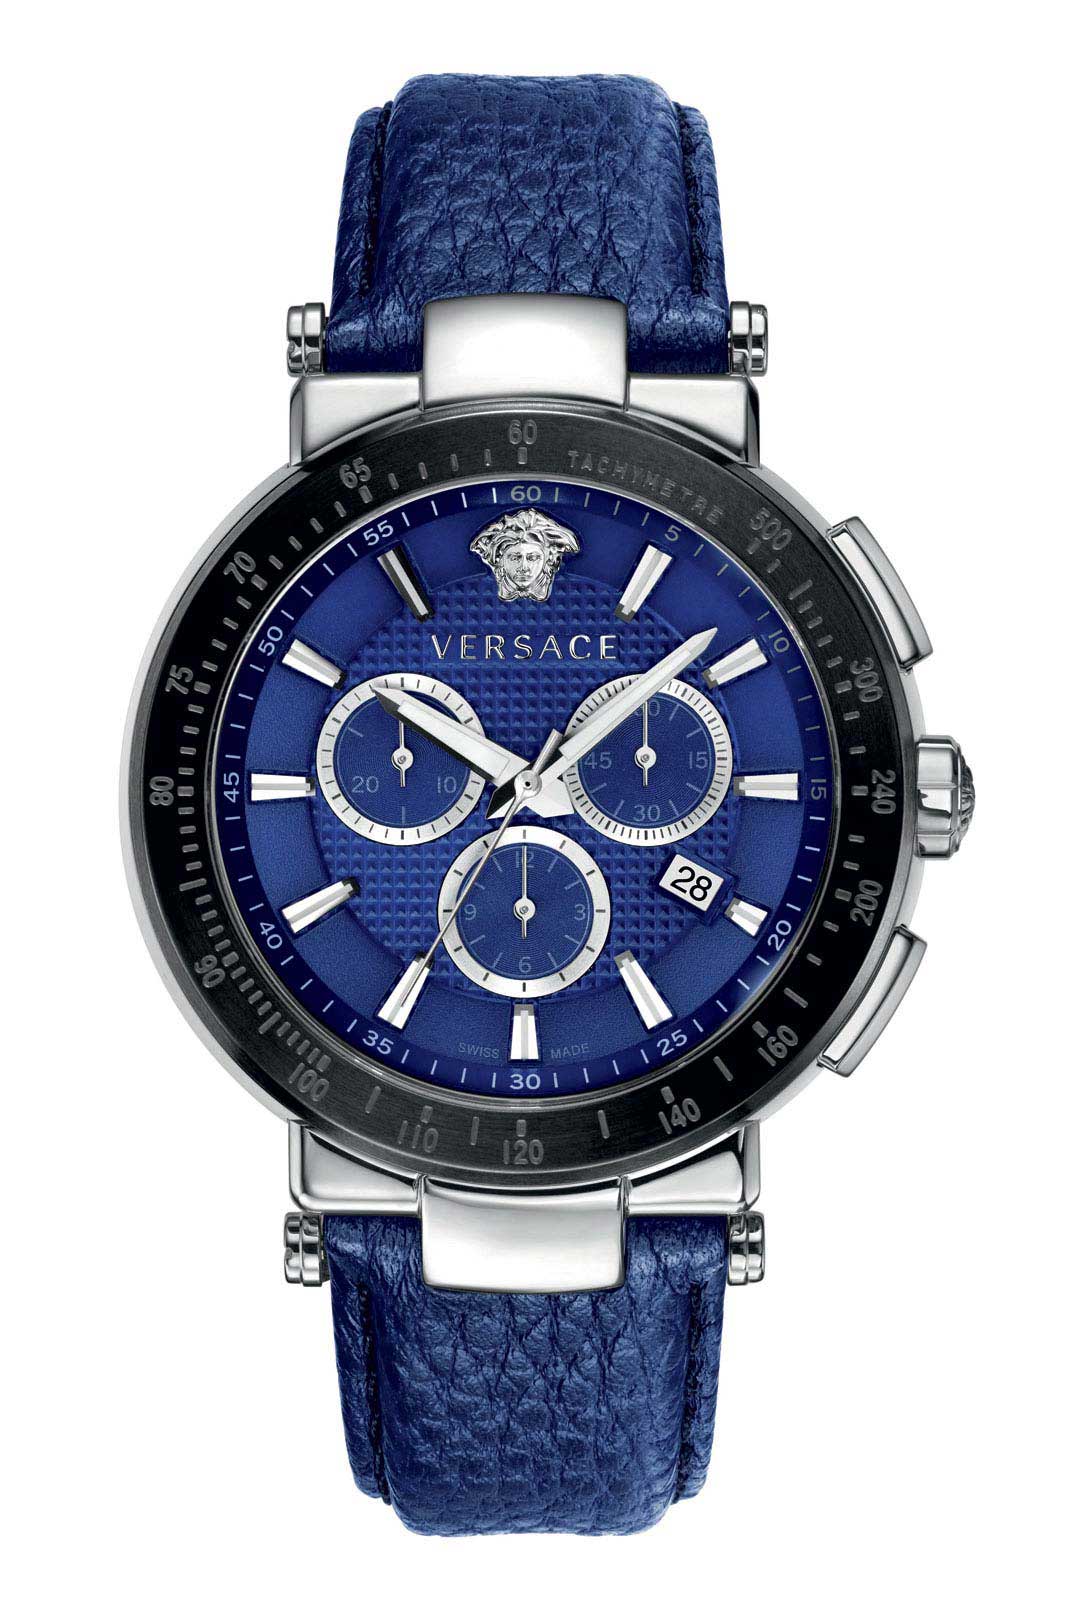 Versace QUARTZ CHRONO watch 5030D STEEL BLUE - Click Image to Close